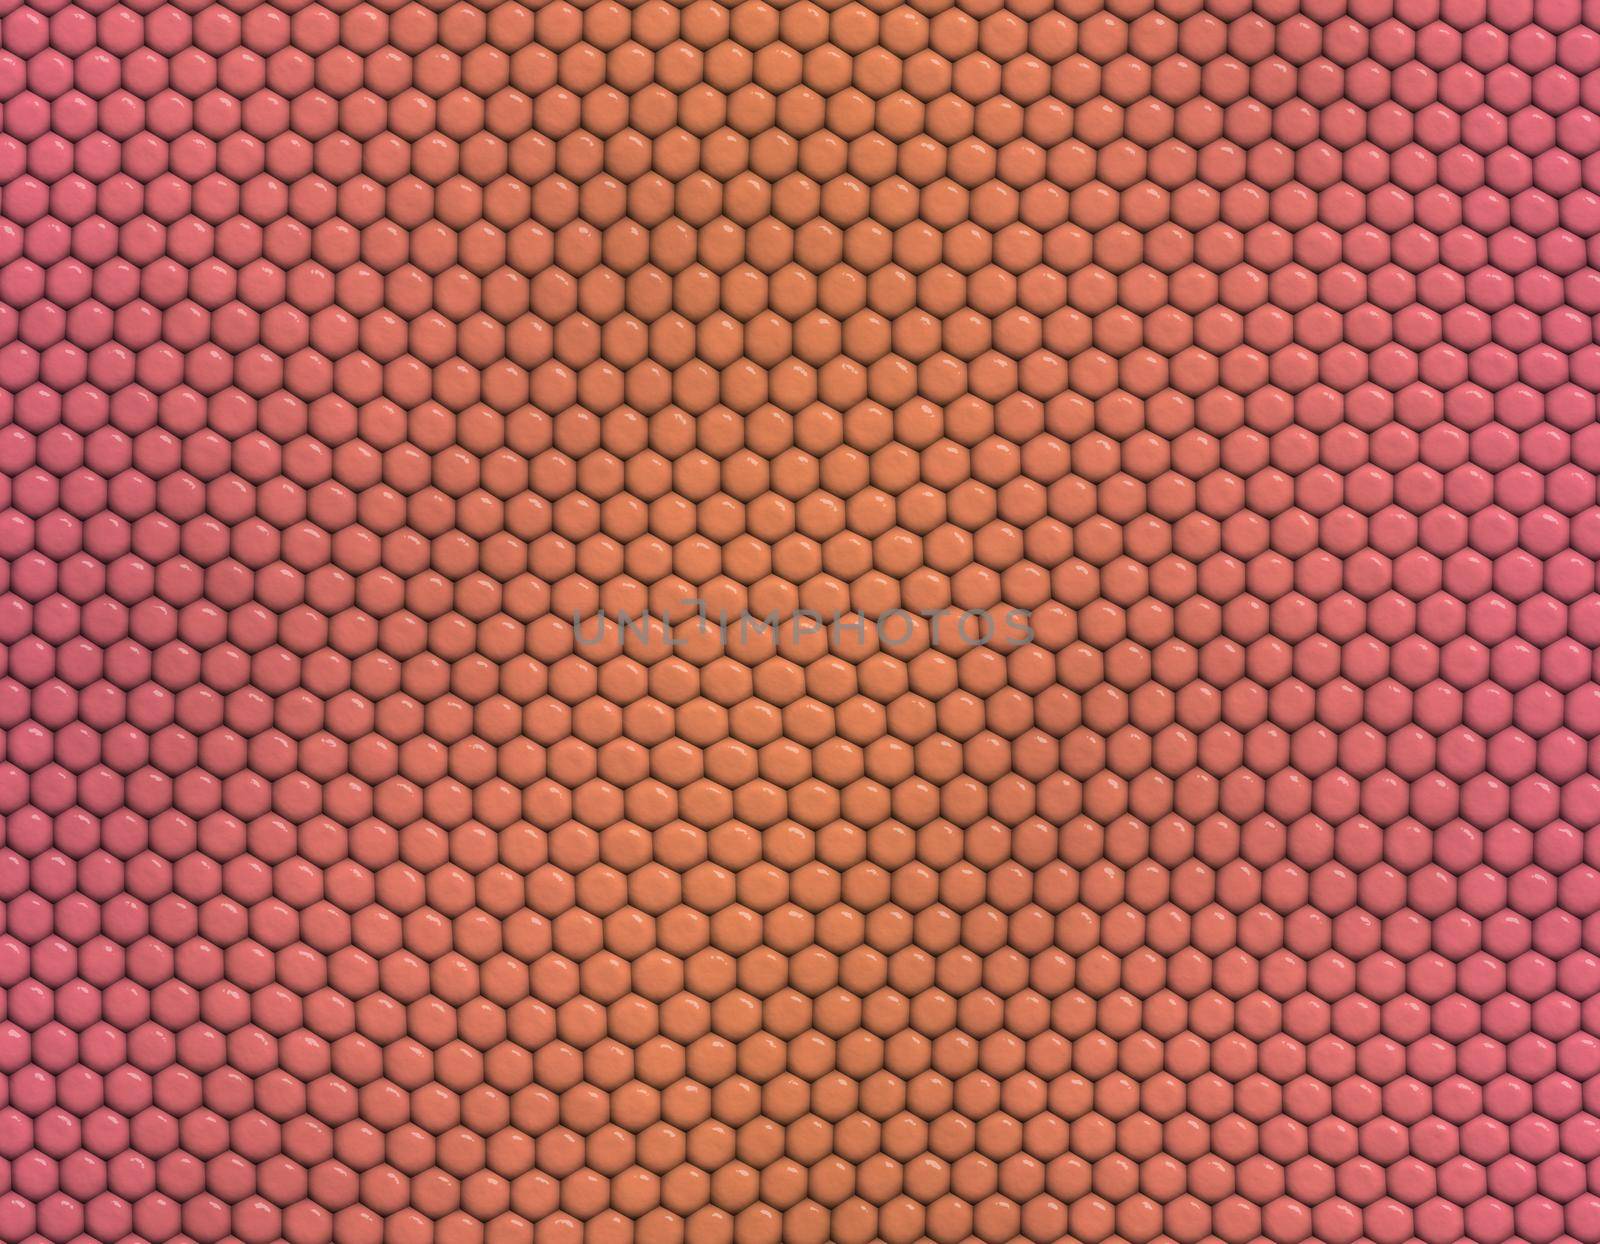 Pink and orange gradient snake skin seamless pattern, hexagonal scale